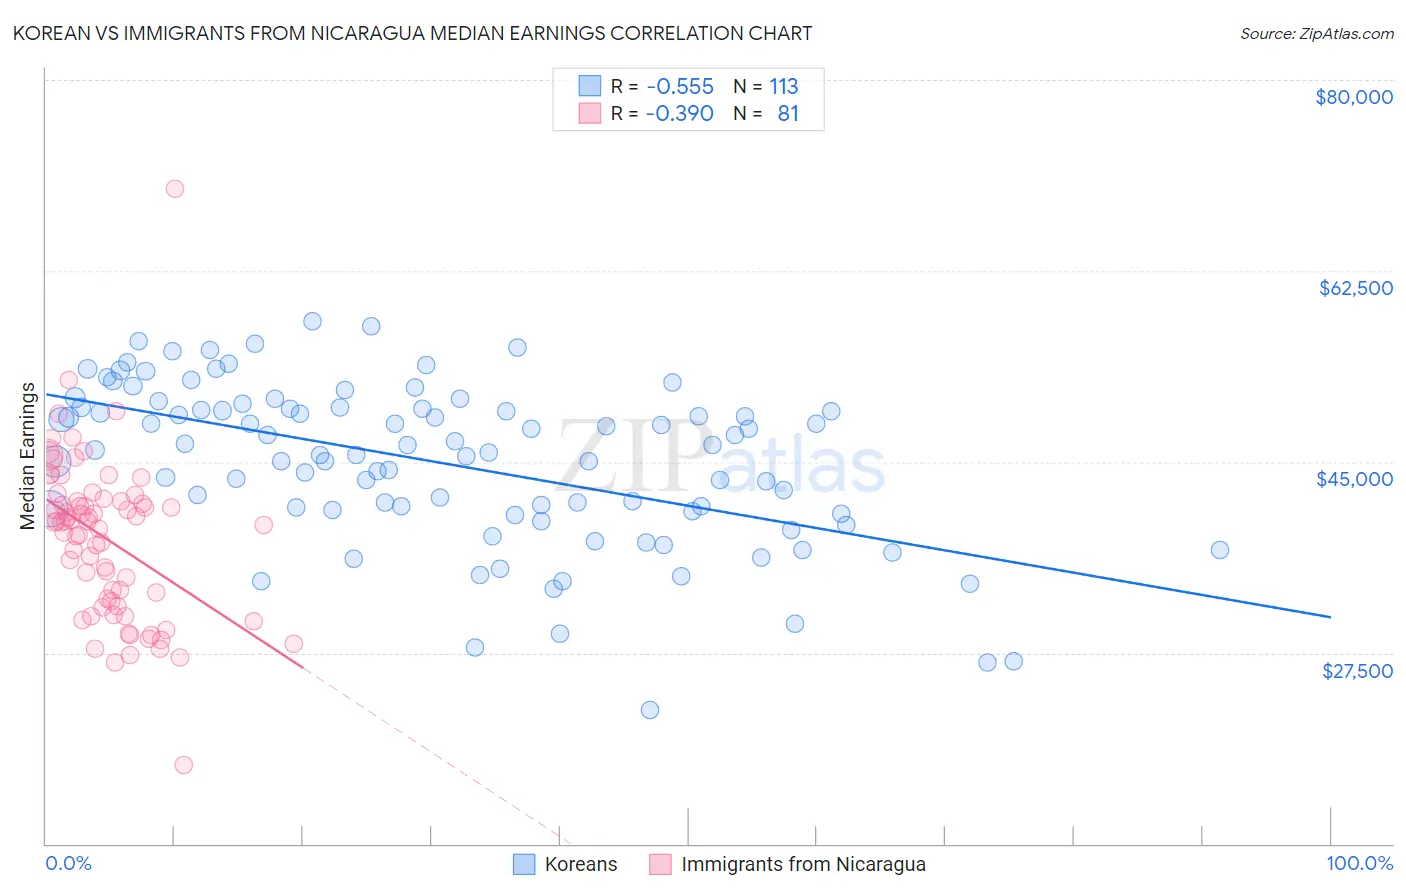 Korean vs Immigrants from Nicaragua Median Earnings